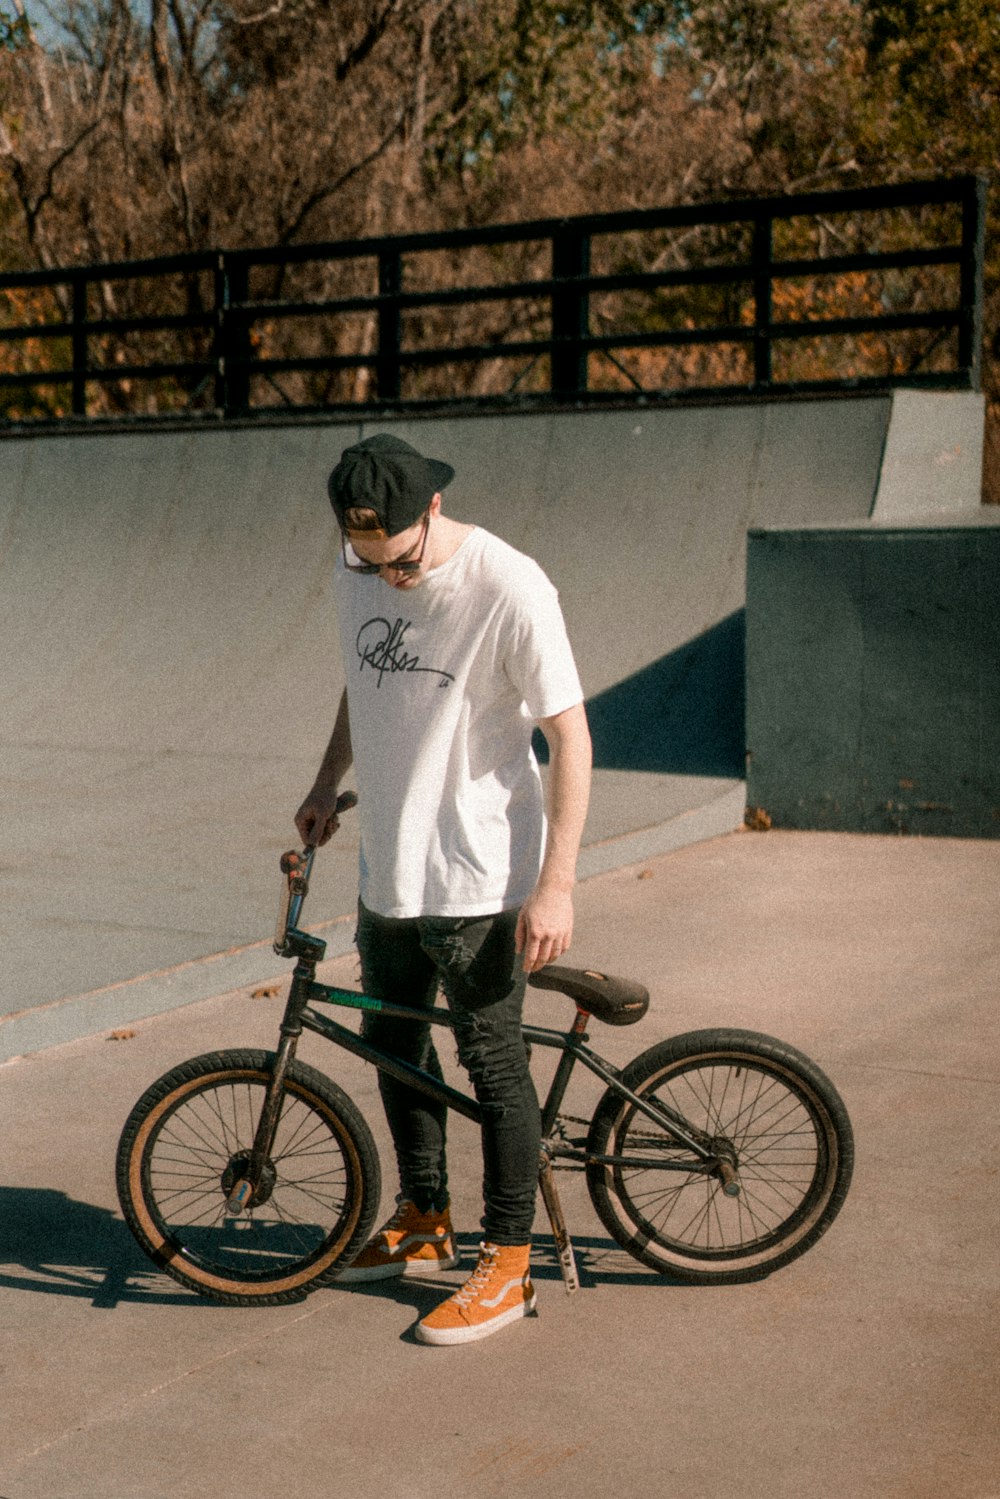 man about to ride on a black BMX bike photo – Free Bicycle Image on Unsplash